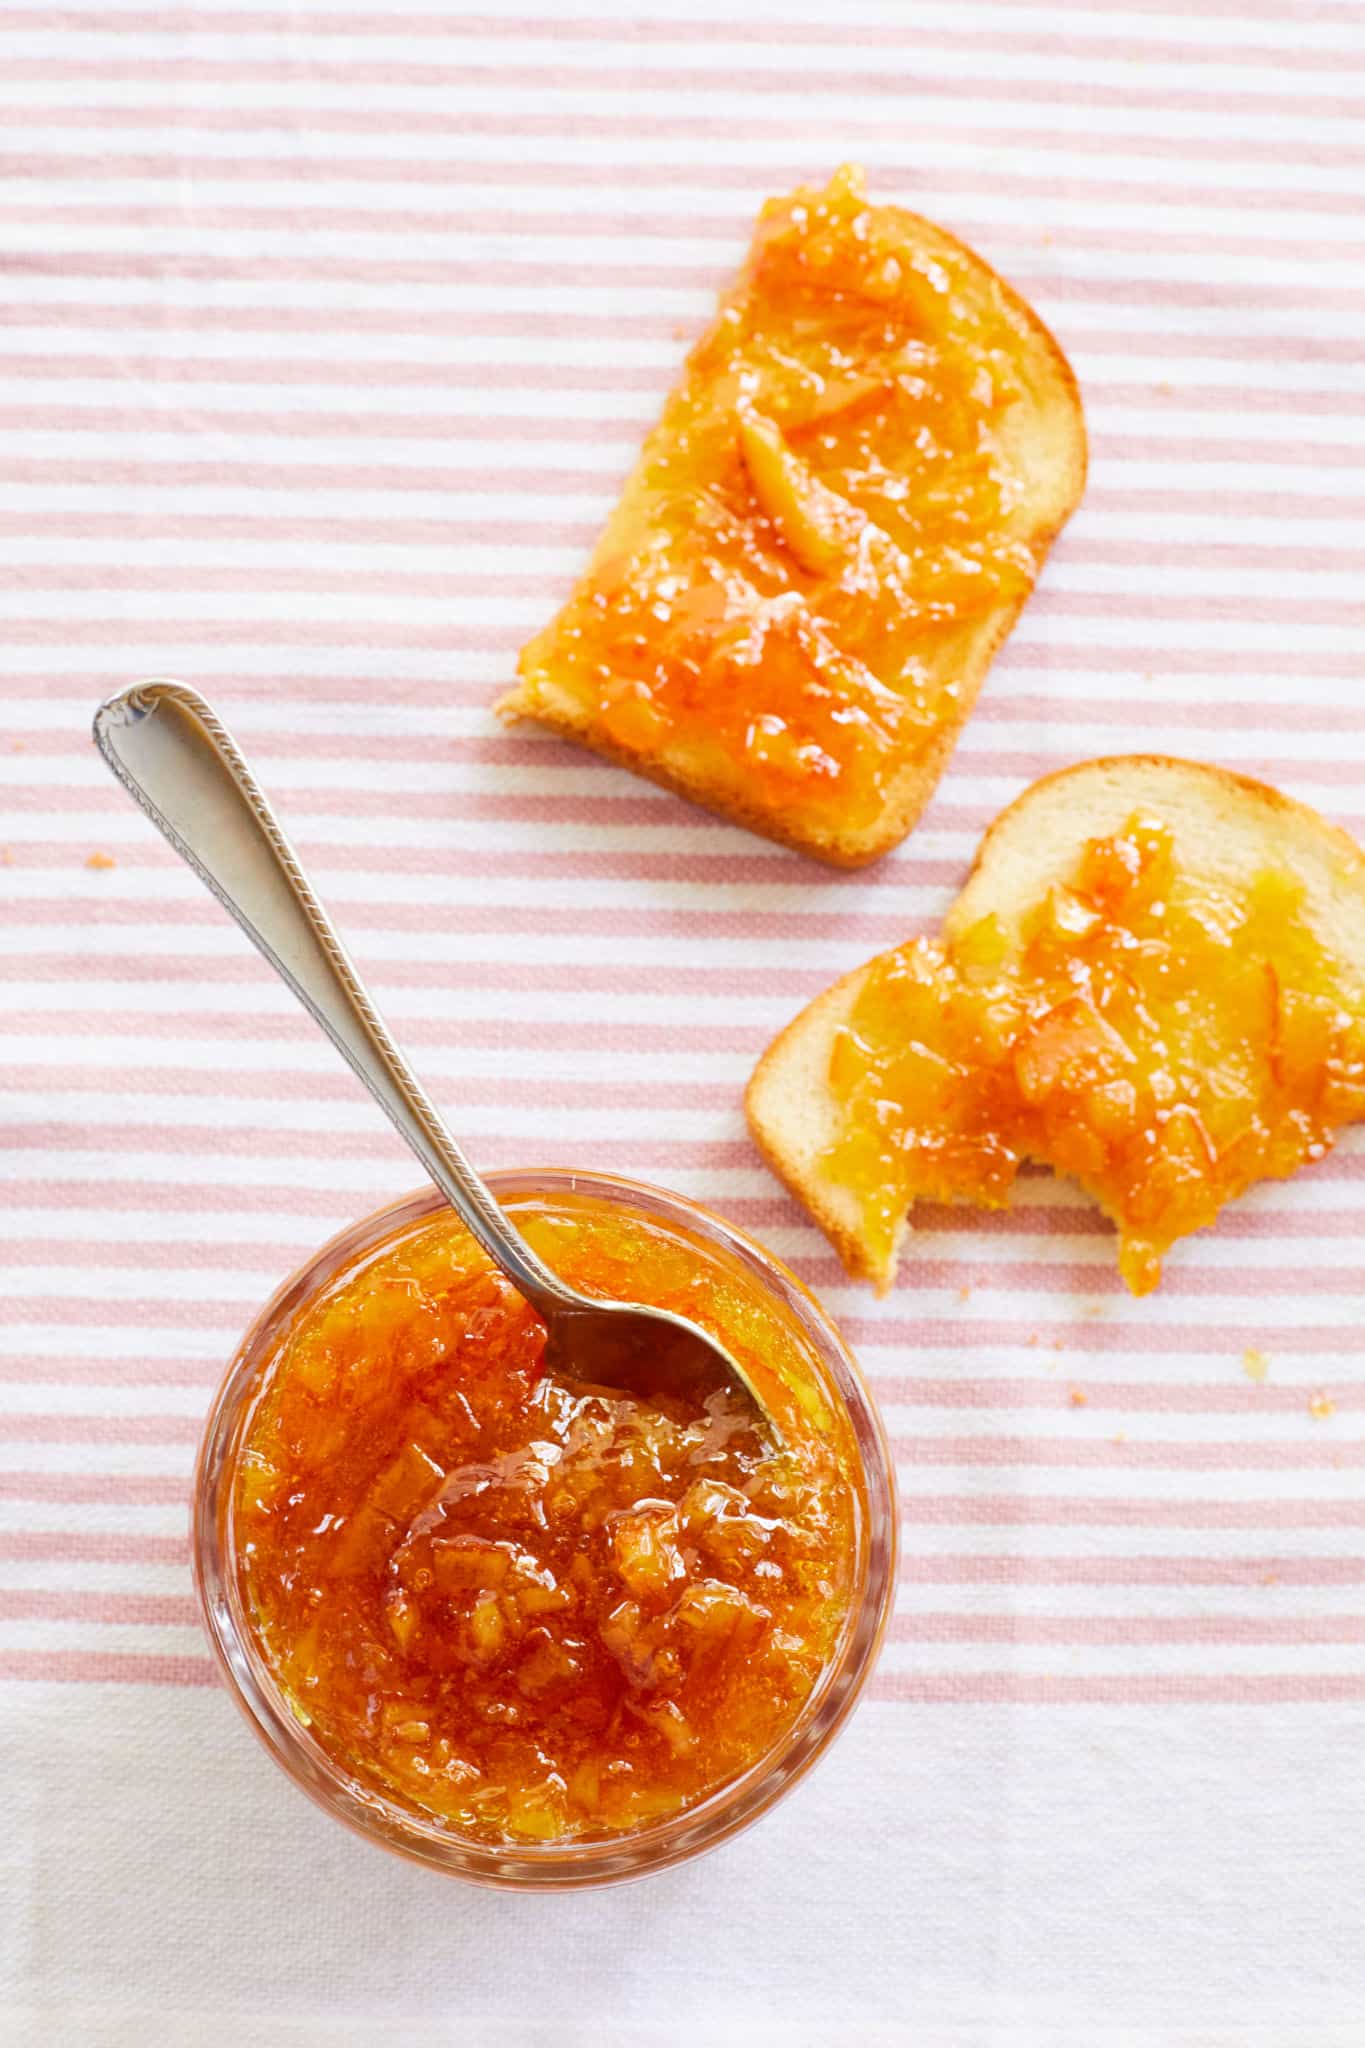 A jar of orange marmalade next to some toast.